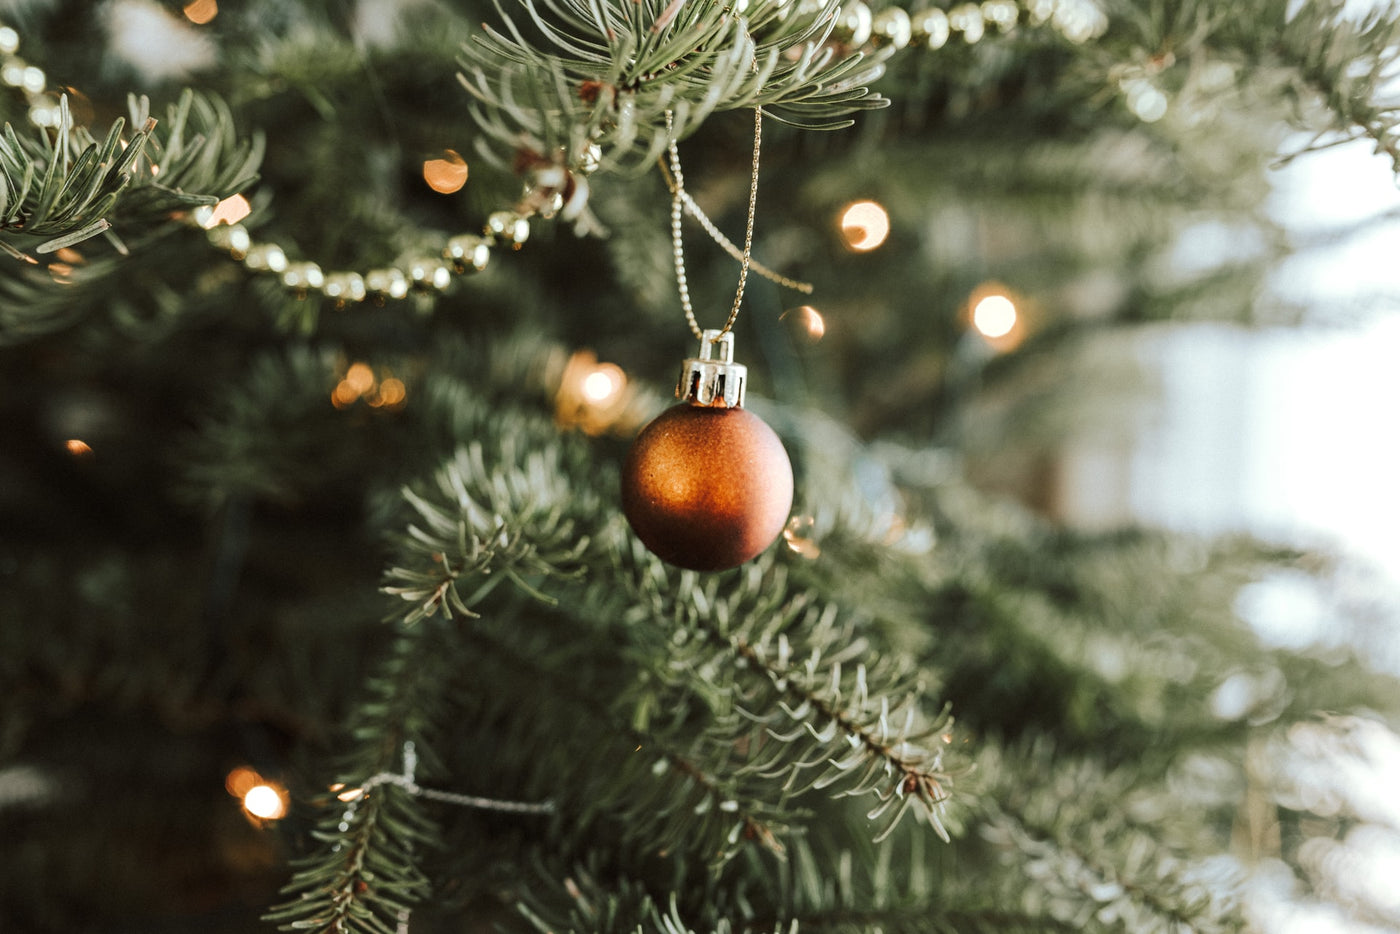 Christmas tree limbs with lights and orange ball ornament